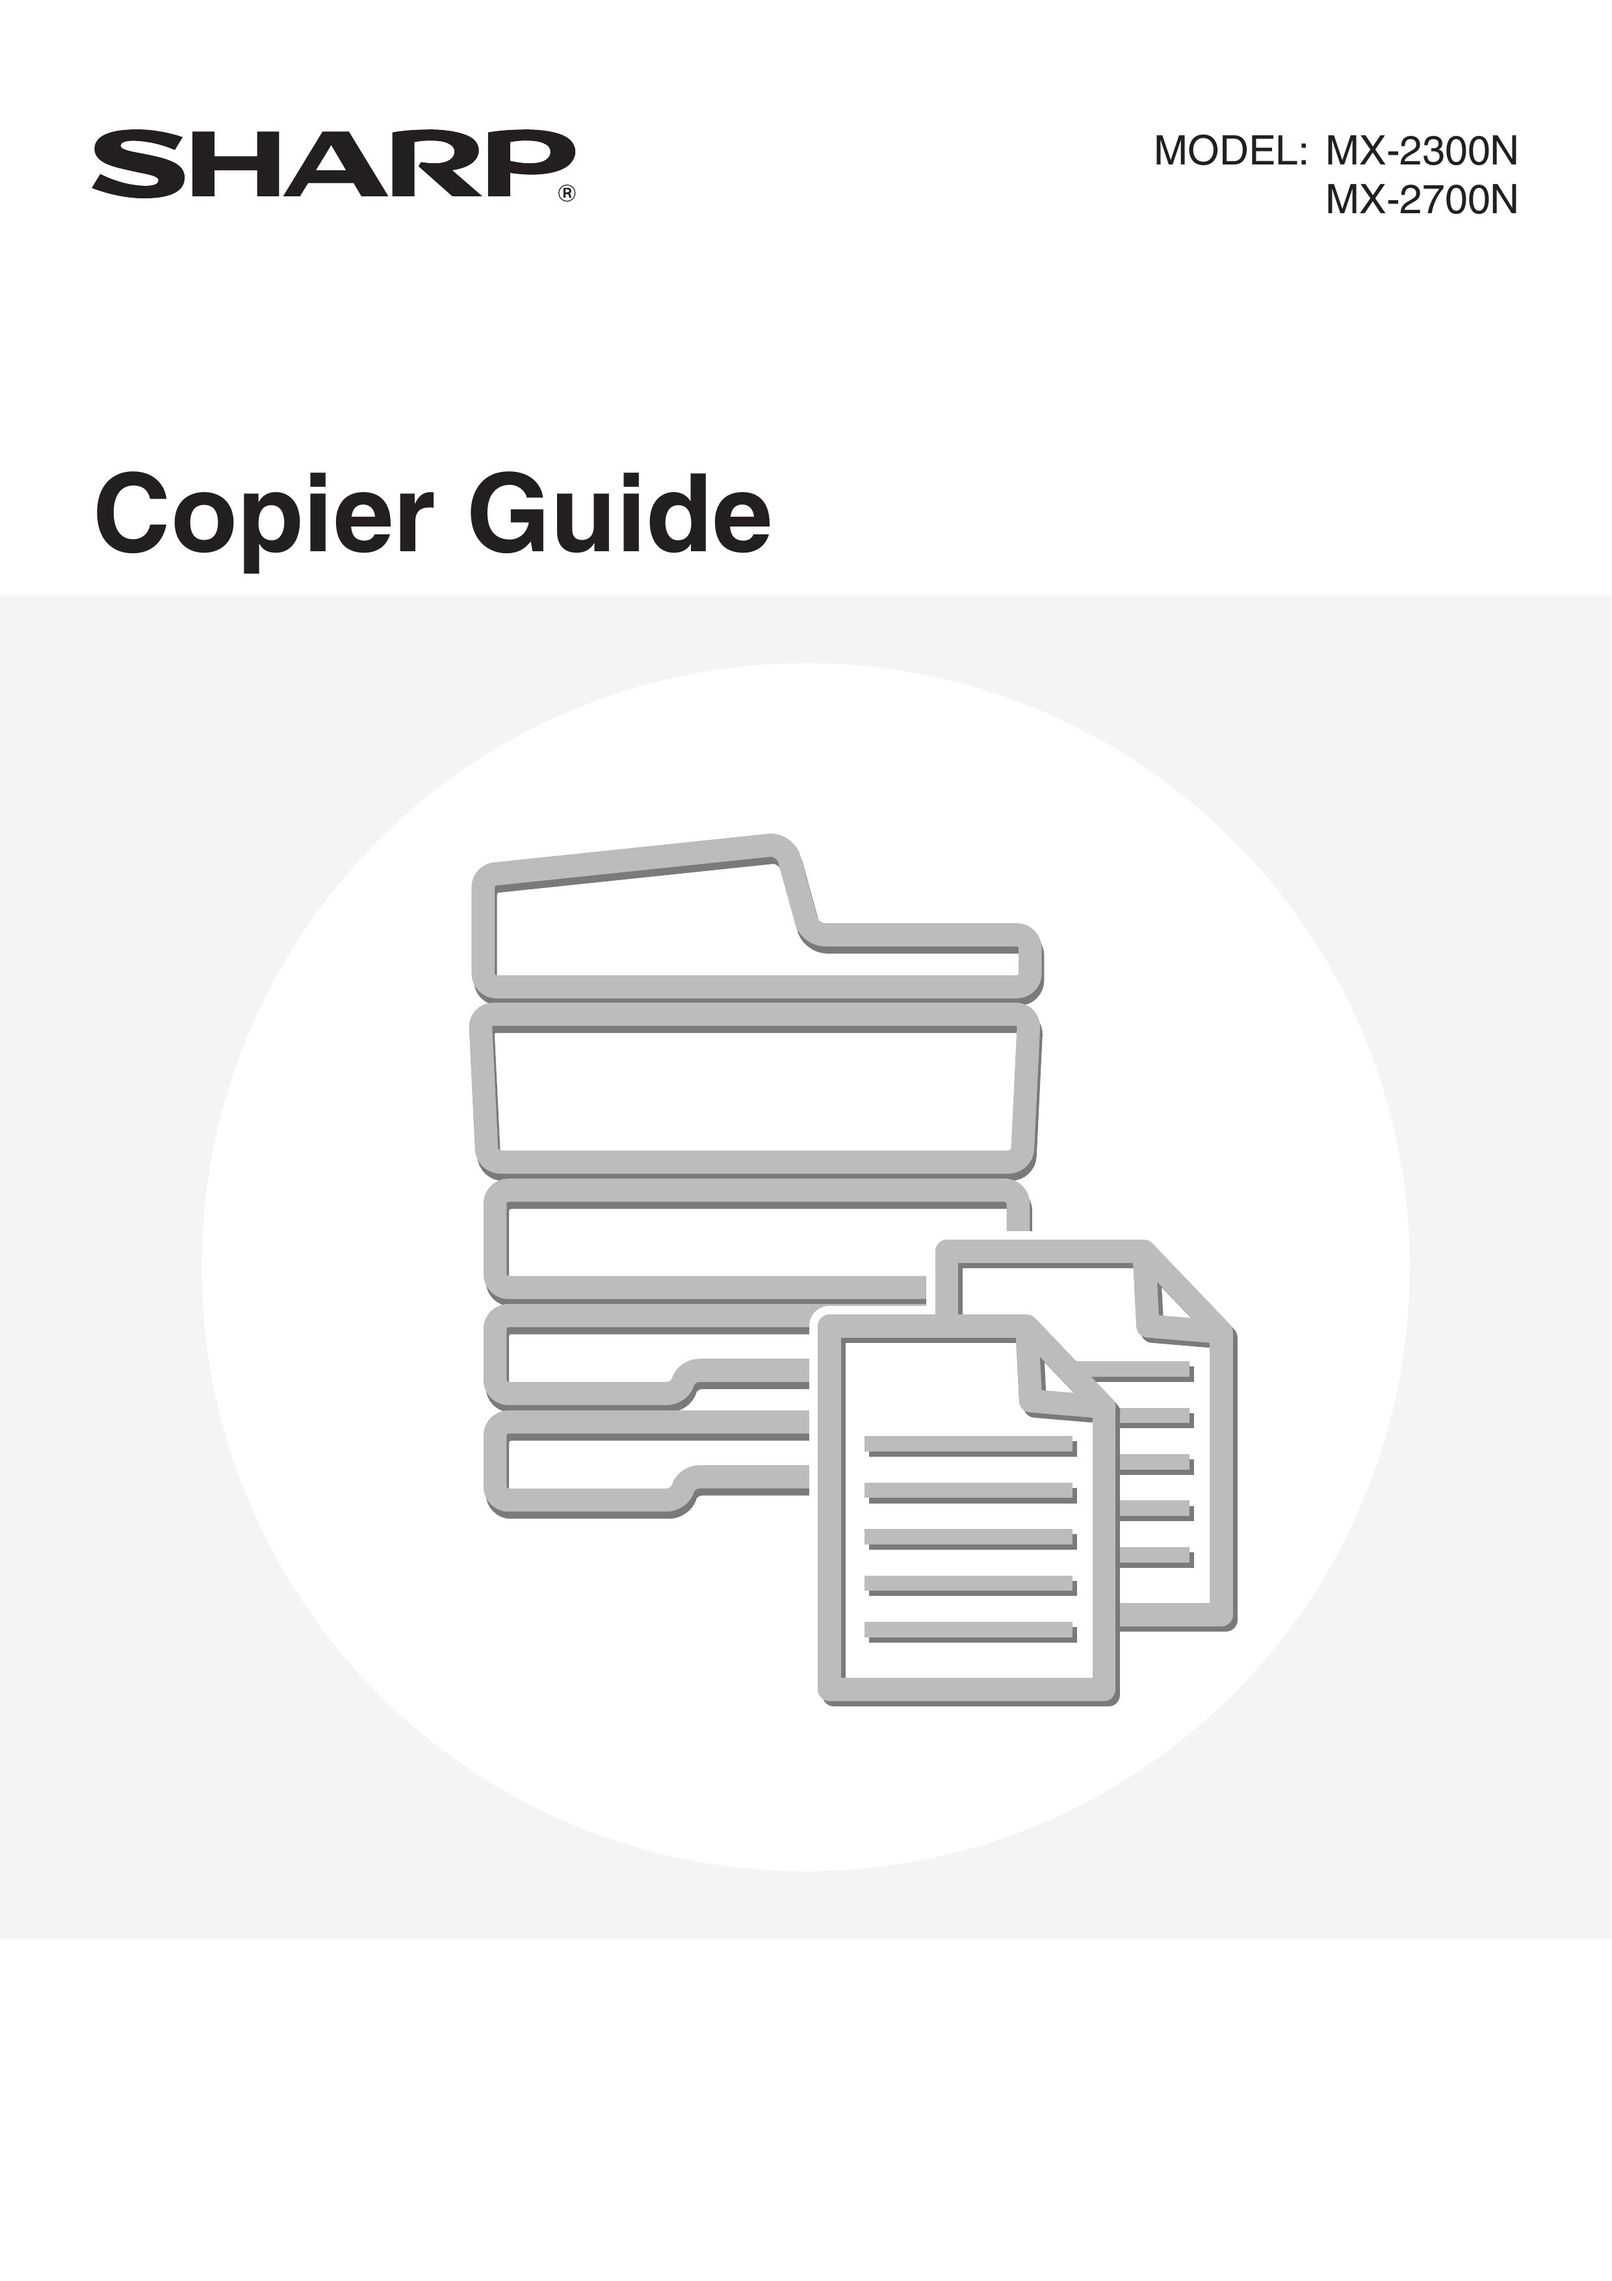 Sharp MX-2700N Copier User Manual